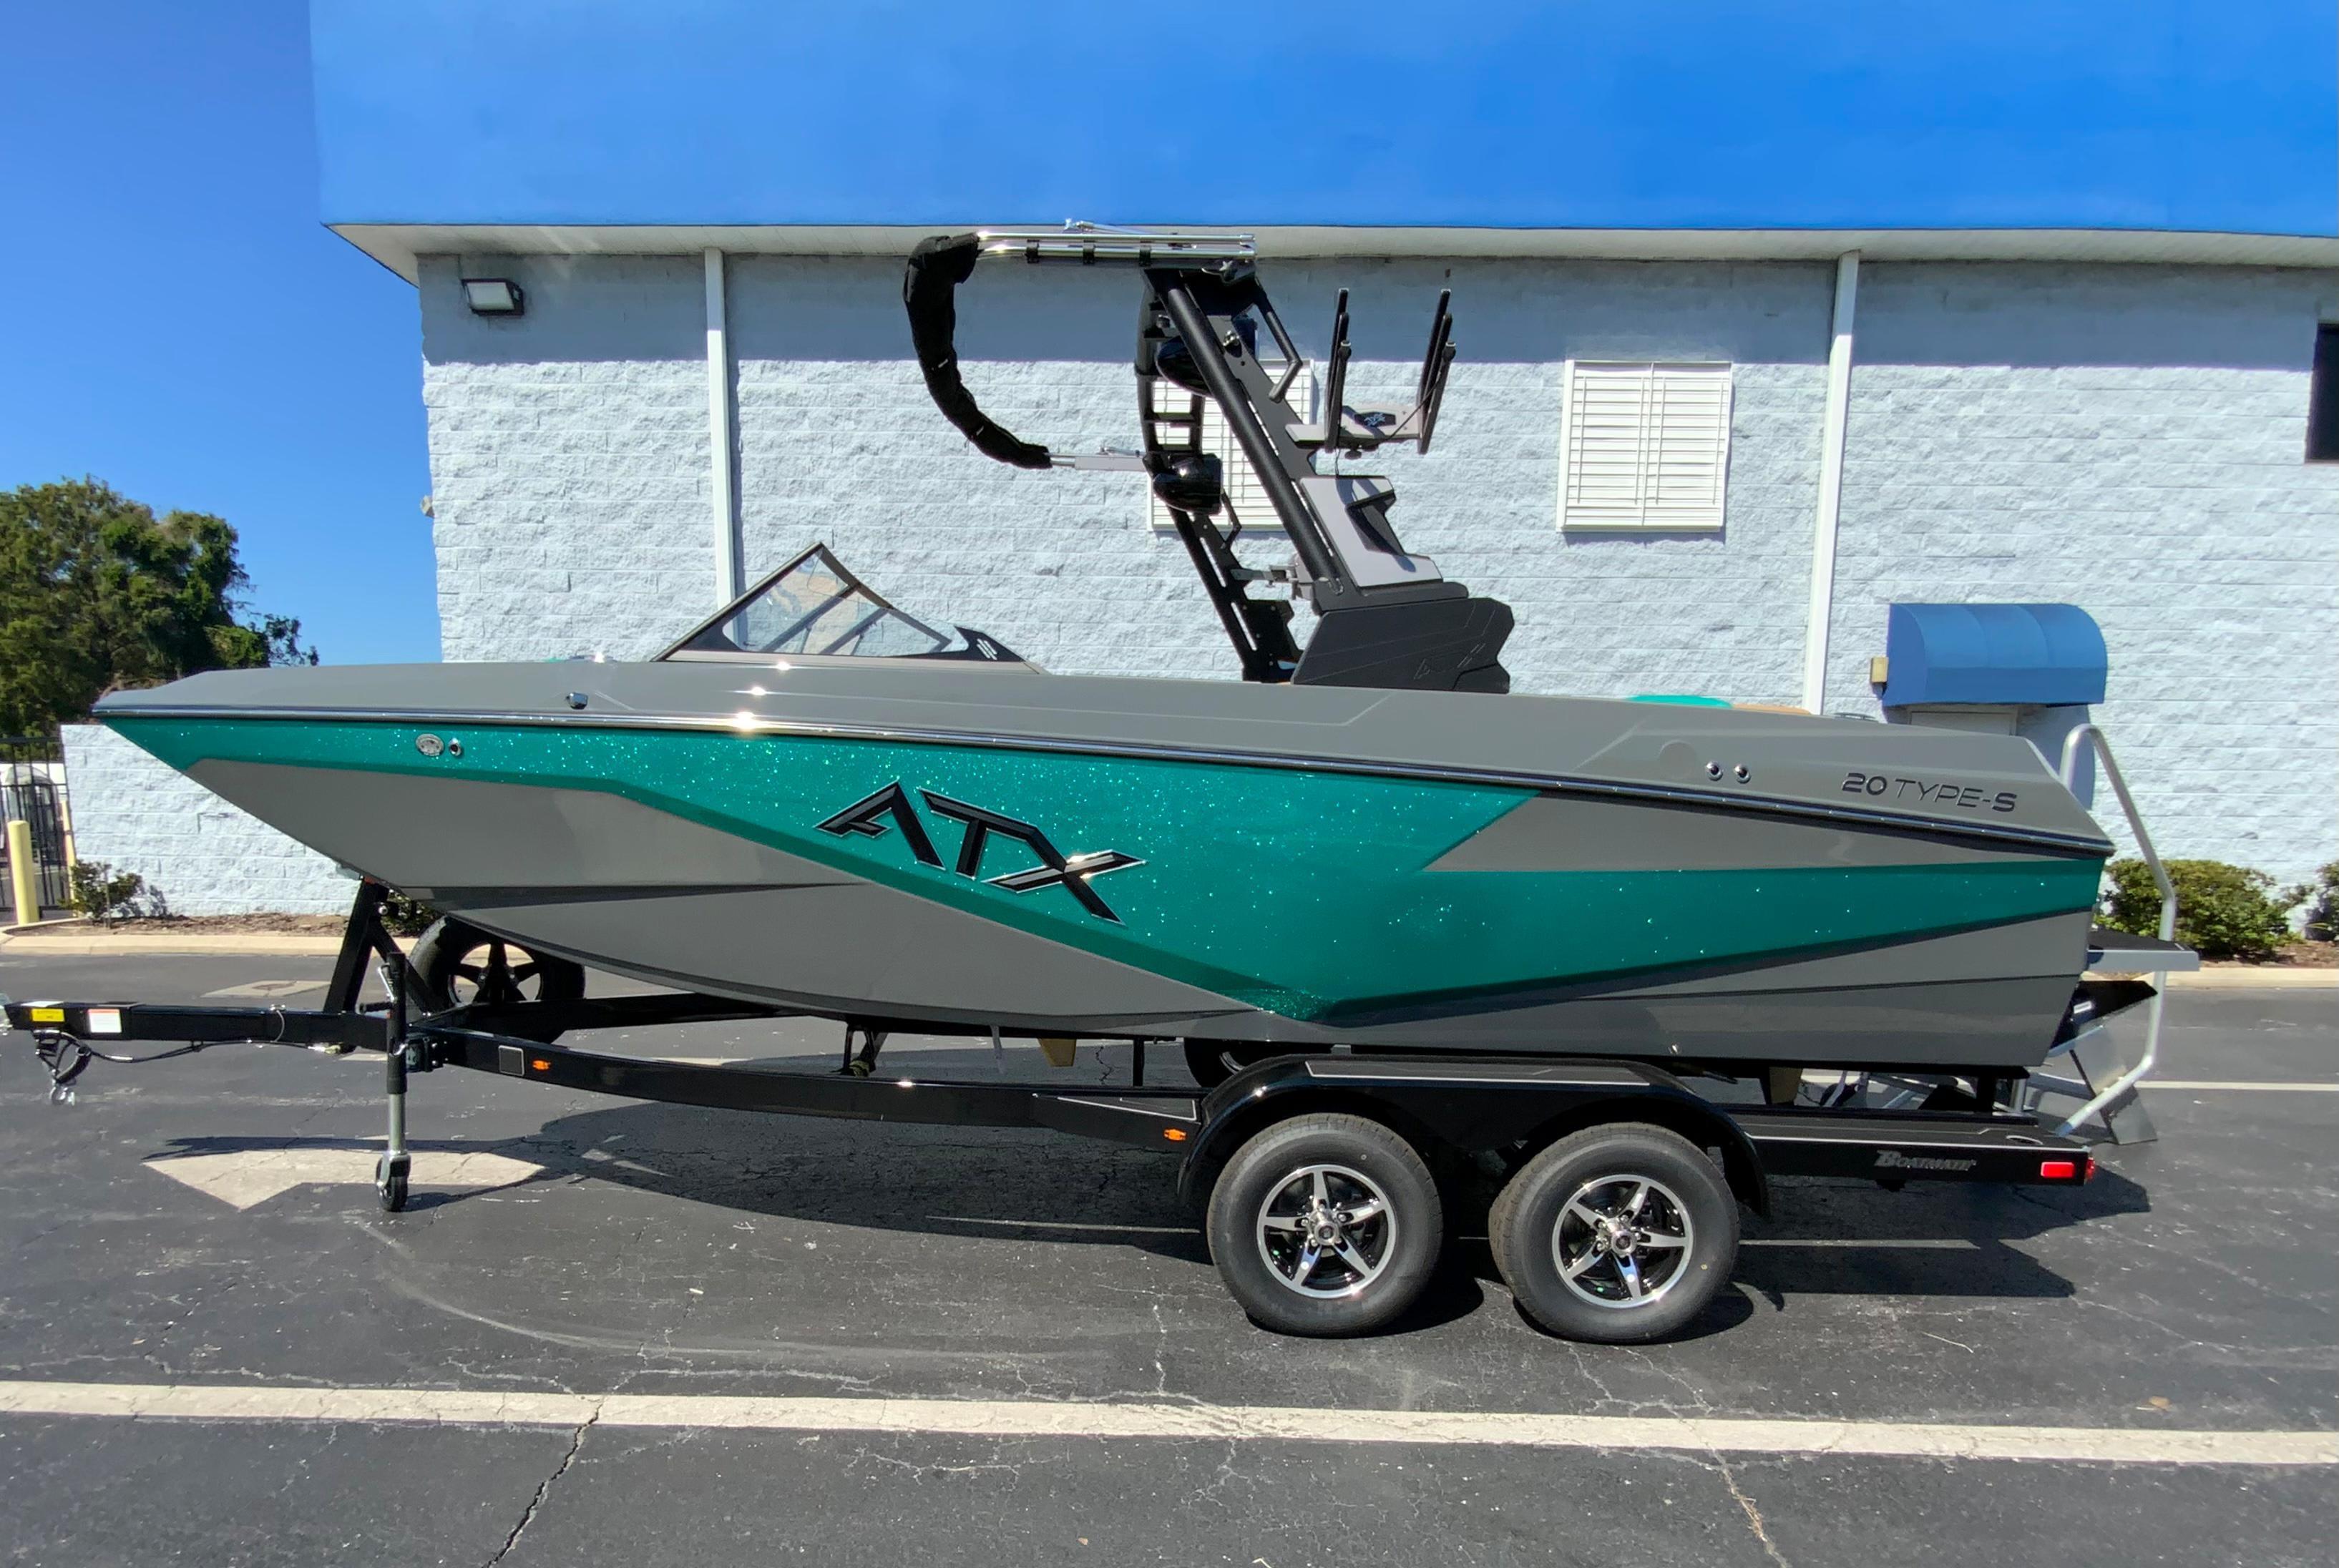 2023-ATX-Surf-Boats-20-Type-S-MarineMax-Orlando